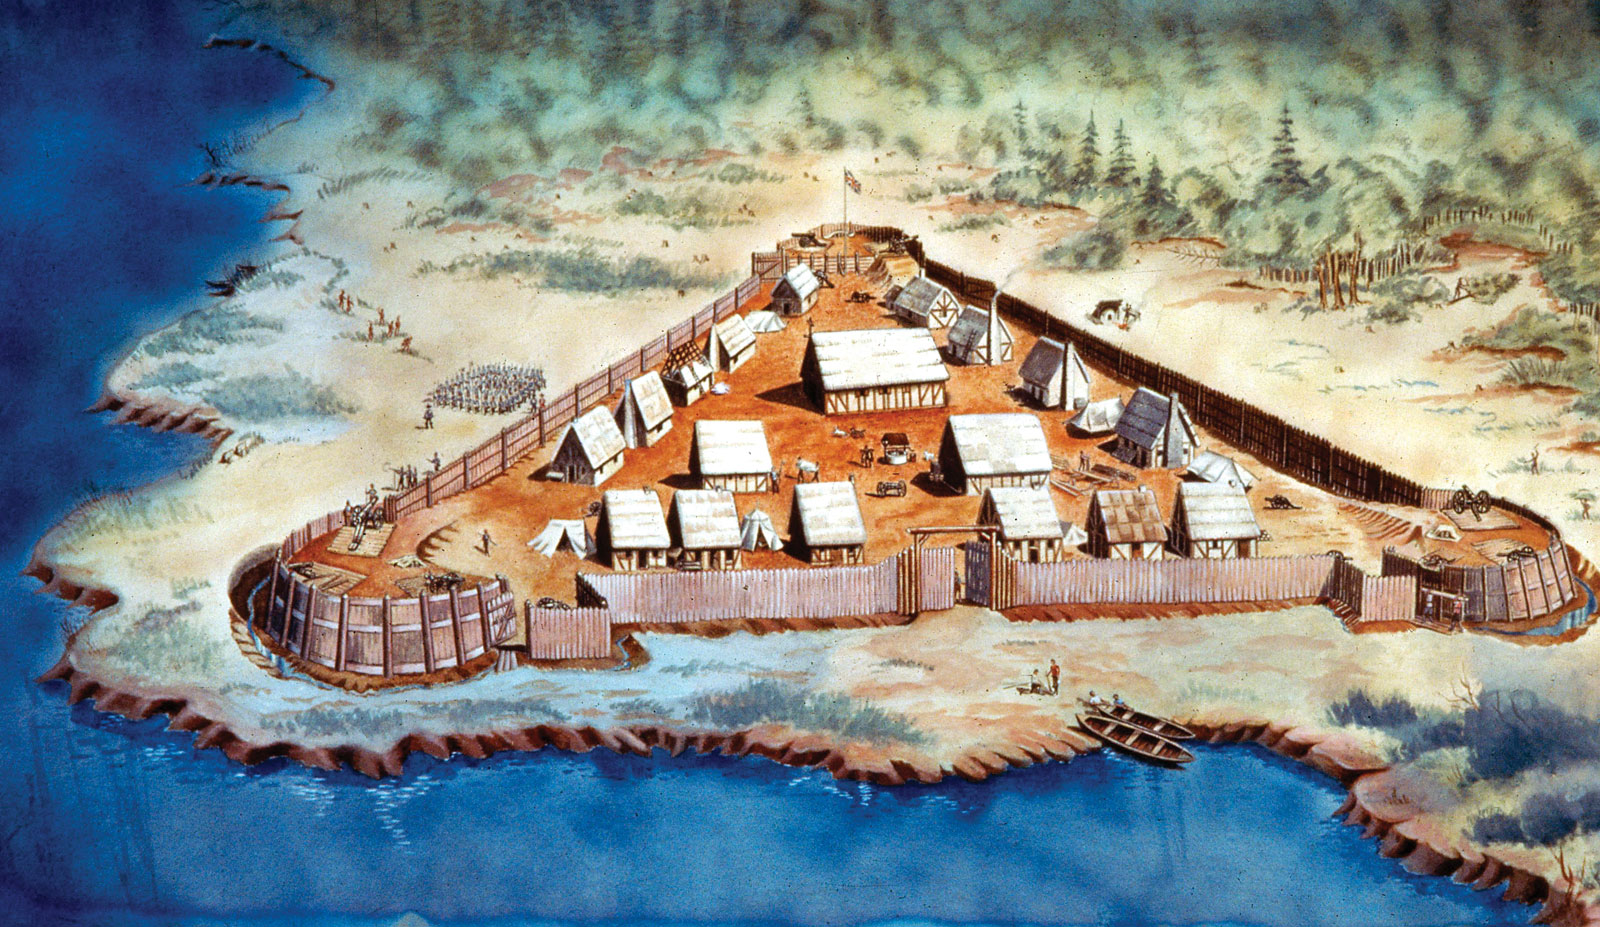 Jamestown Settlement 1607